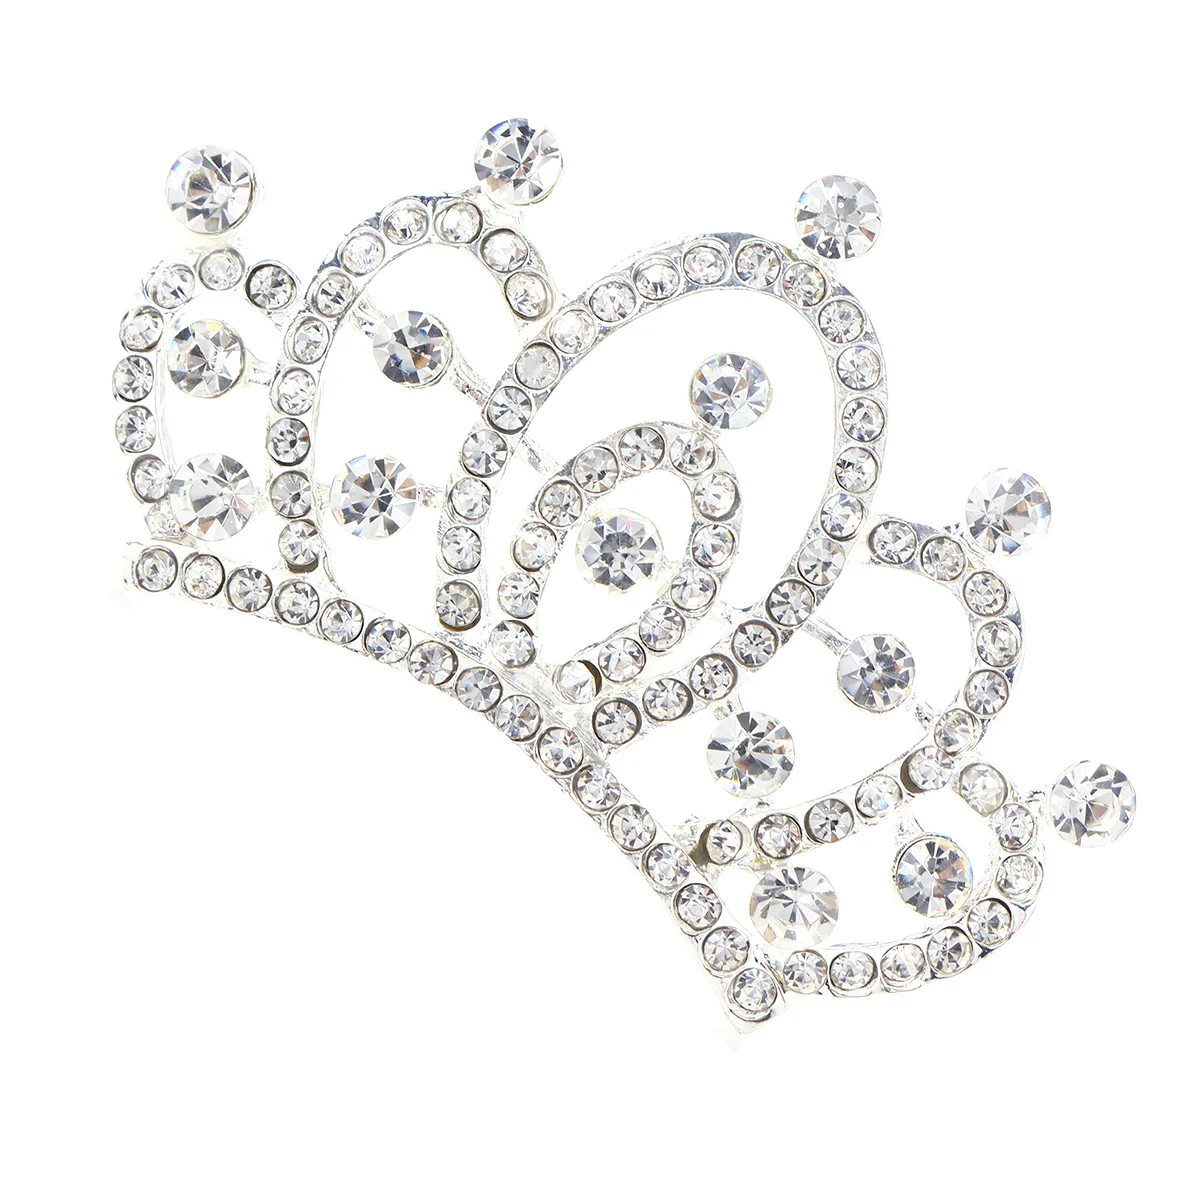 

Girl Sparkling Rhinestone Crown Tiara Headband Comb Crowns Hair Decoration Jewelry for Children